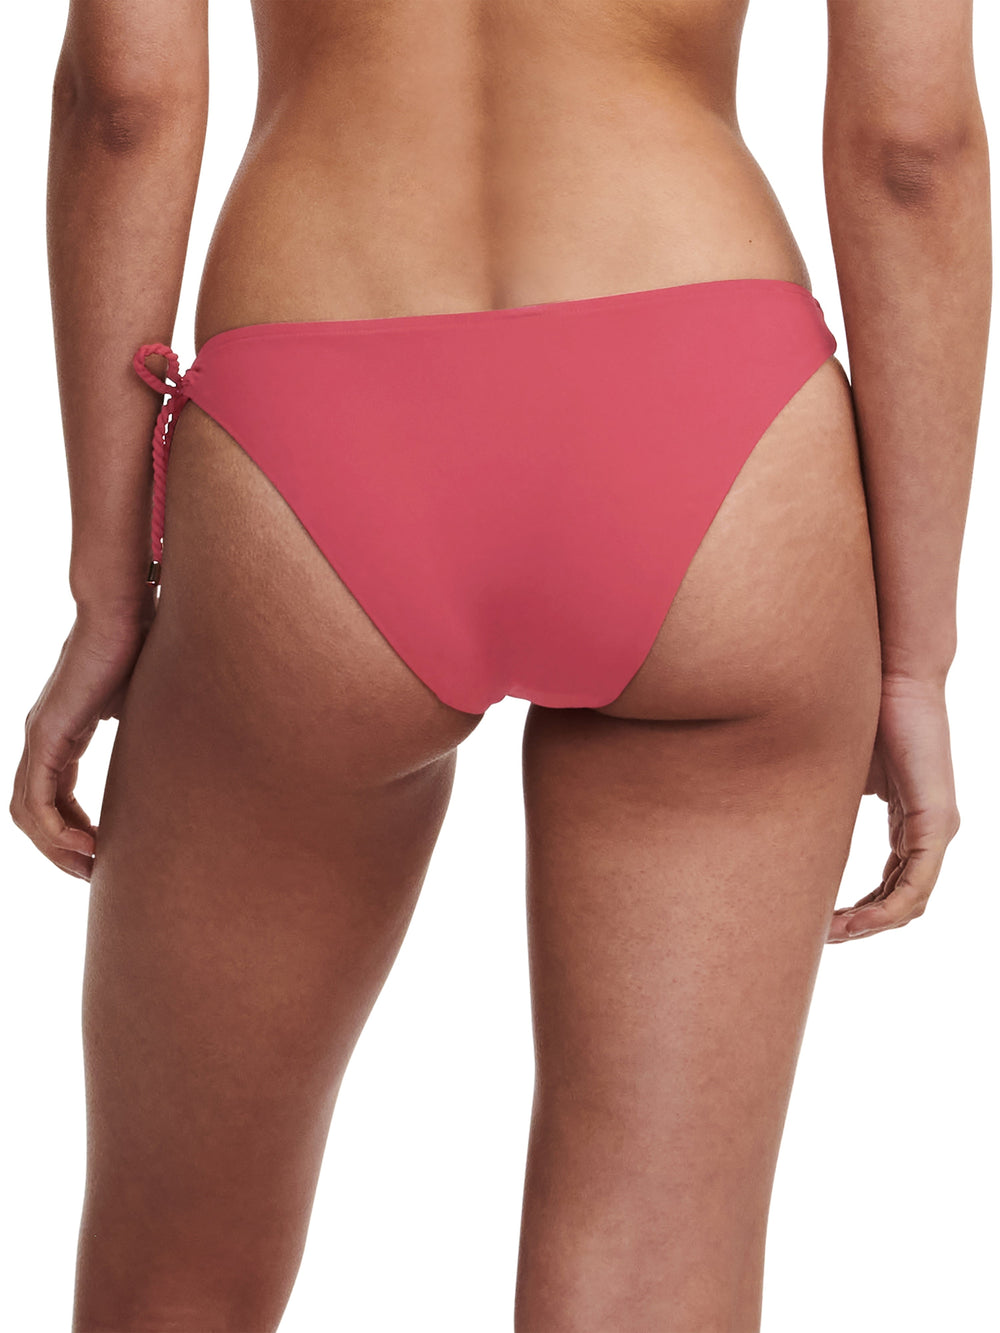 Chantelle Swimwear Inspire Bikini - Garnet Red Full Cup Bikini Chantelle 